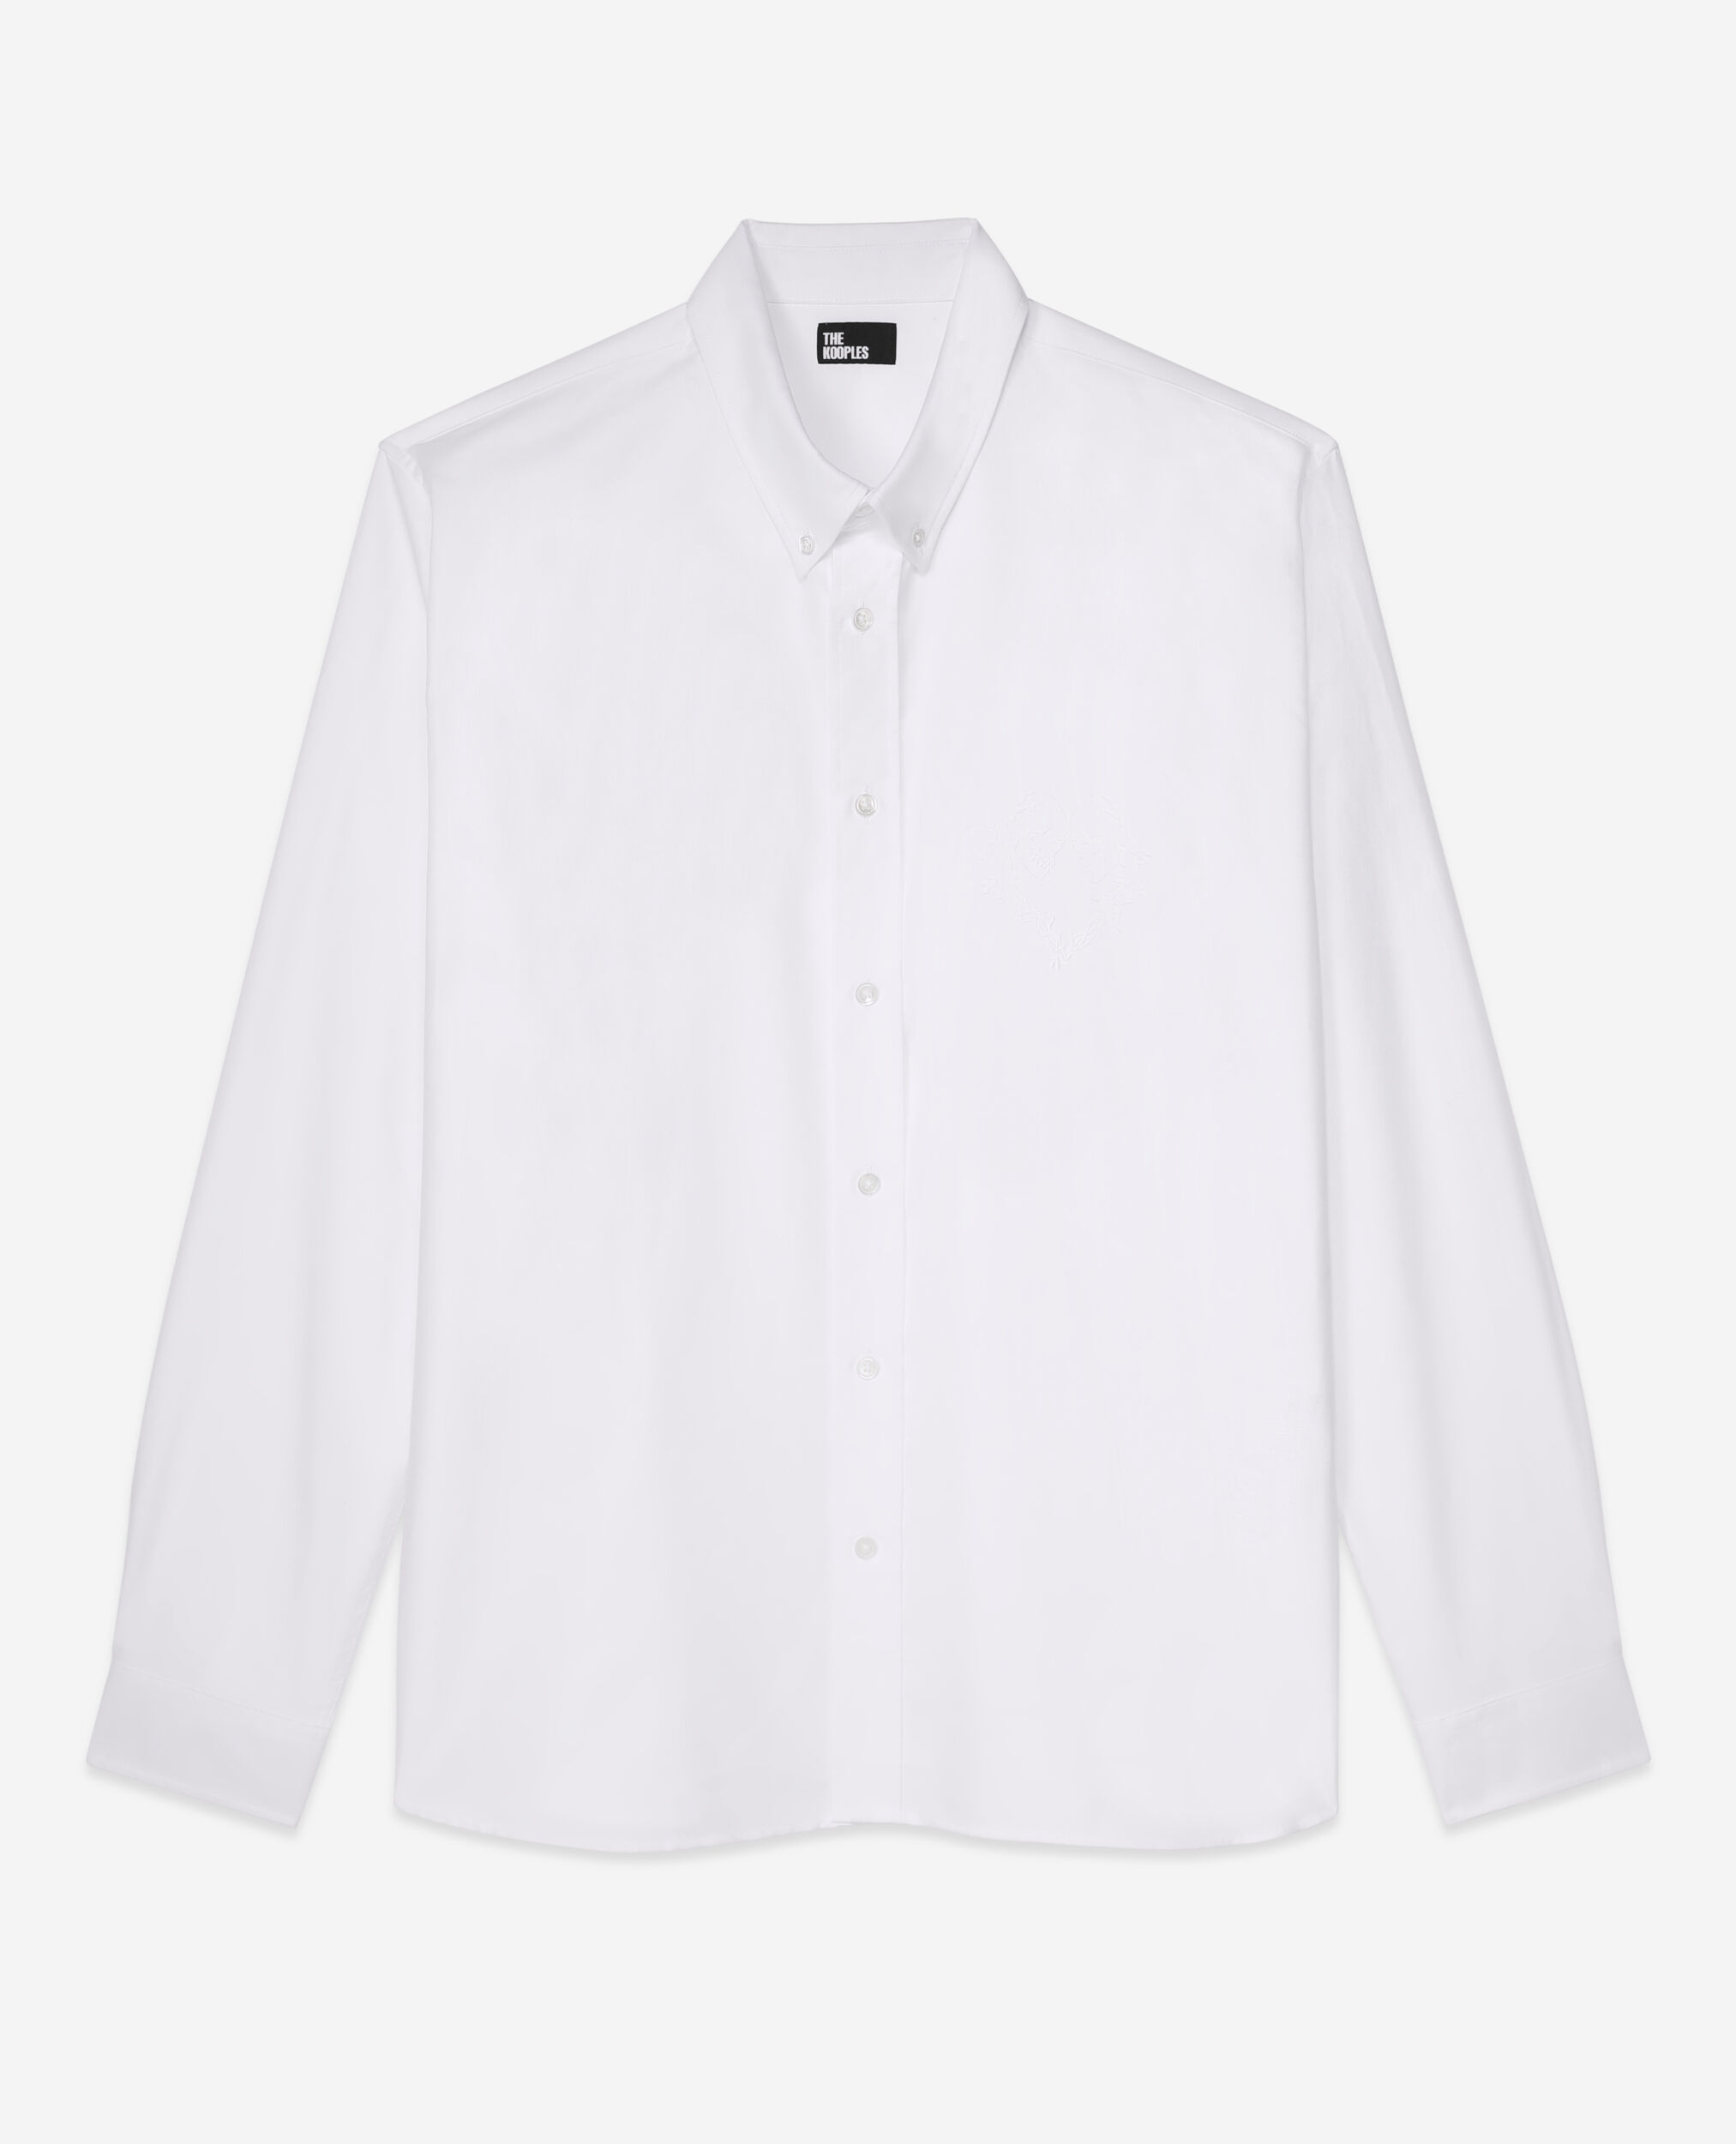 Camisa Oxford blanca bordado, WHITE, hi-res image number null